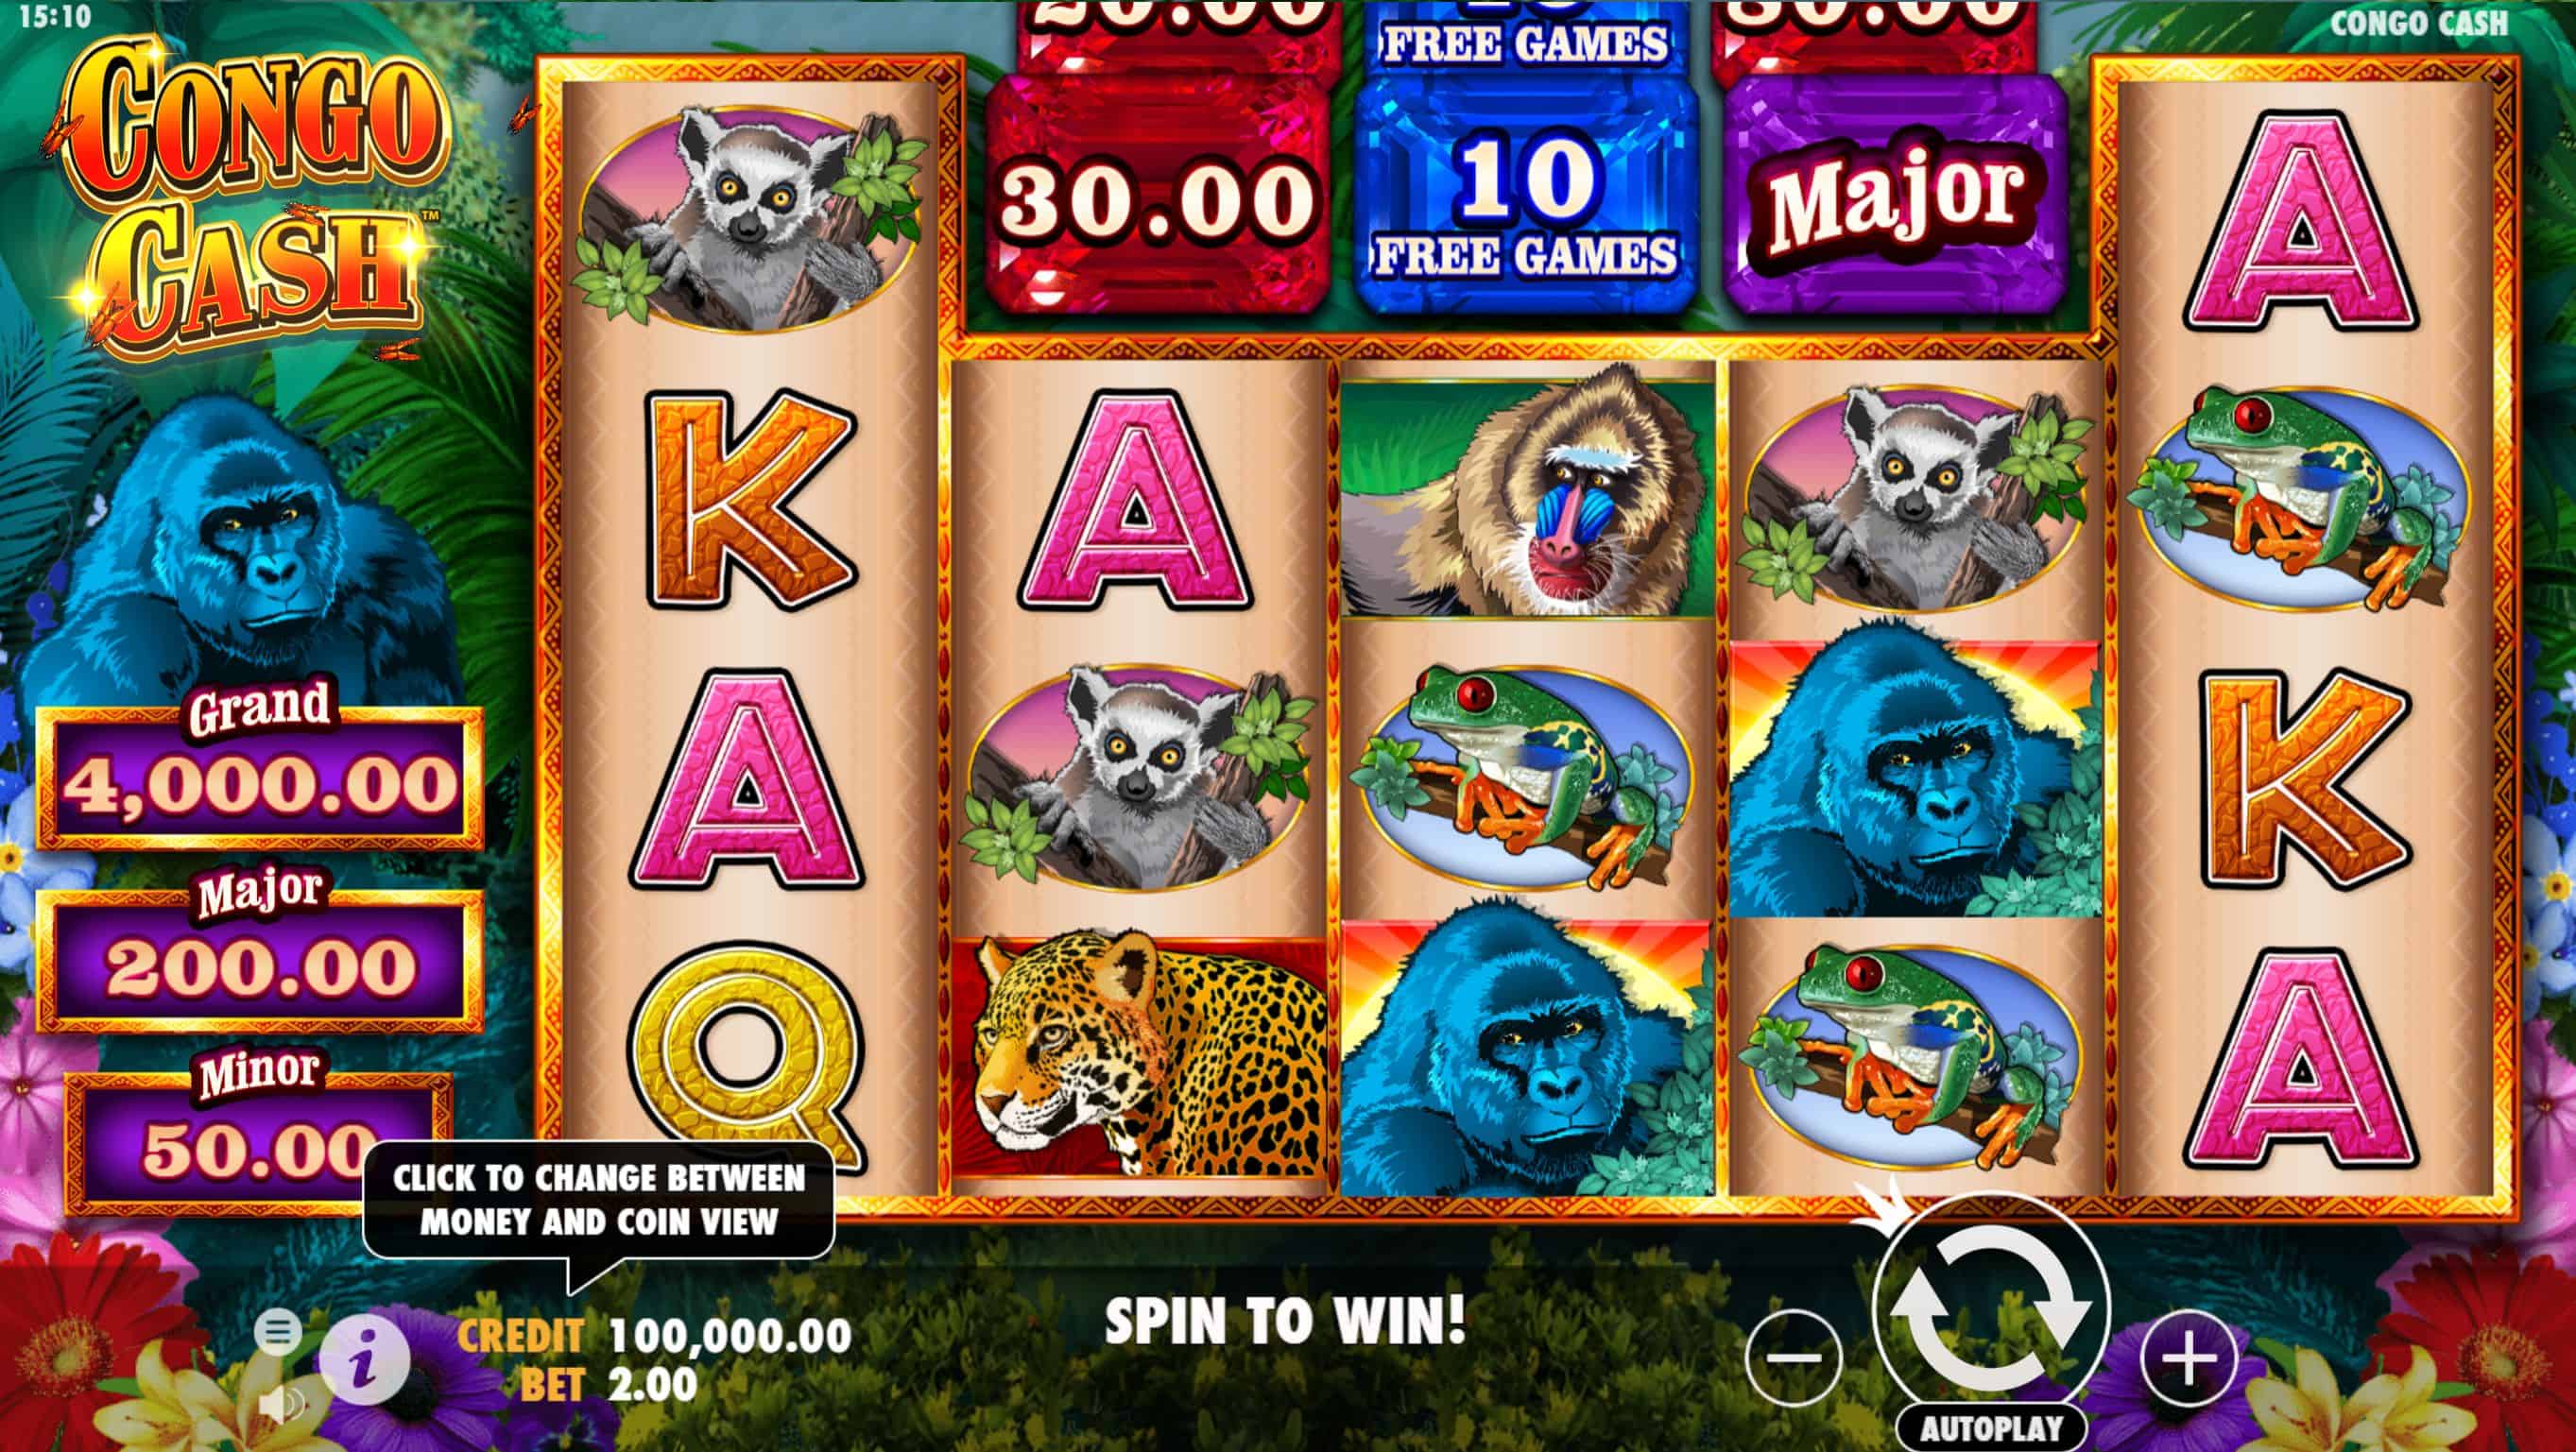 Congo Cash Slot Game Free Play at Casino Ireland 01